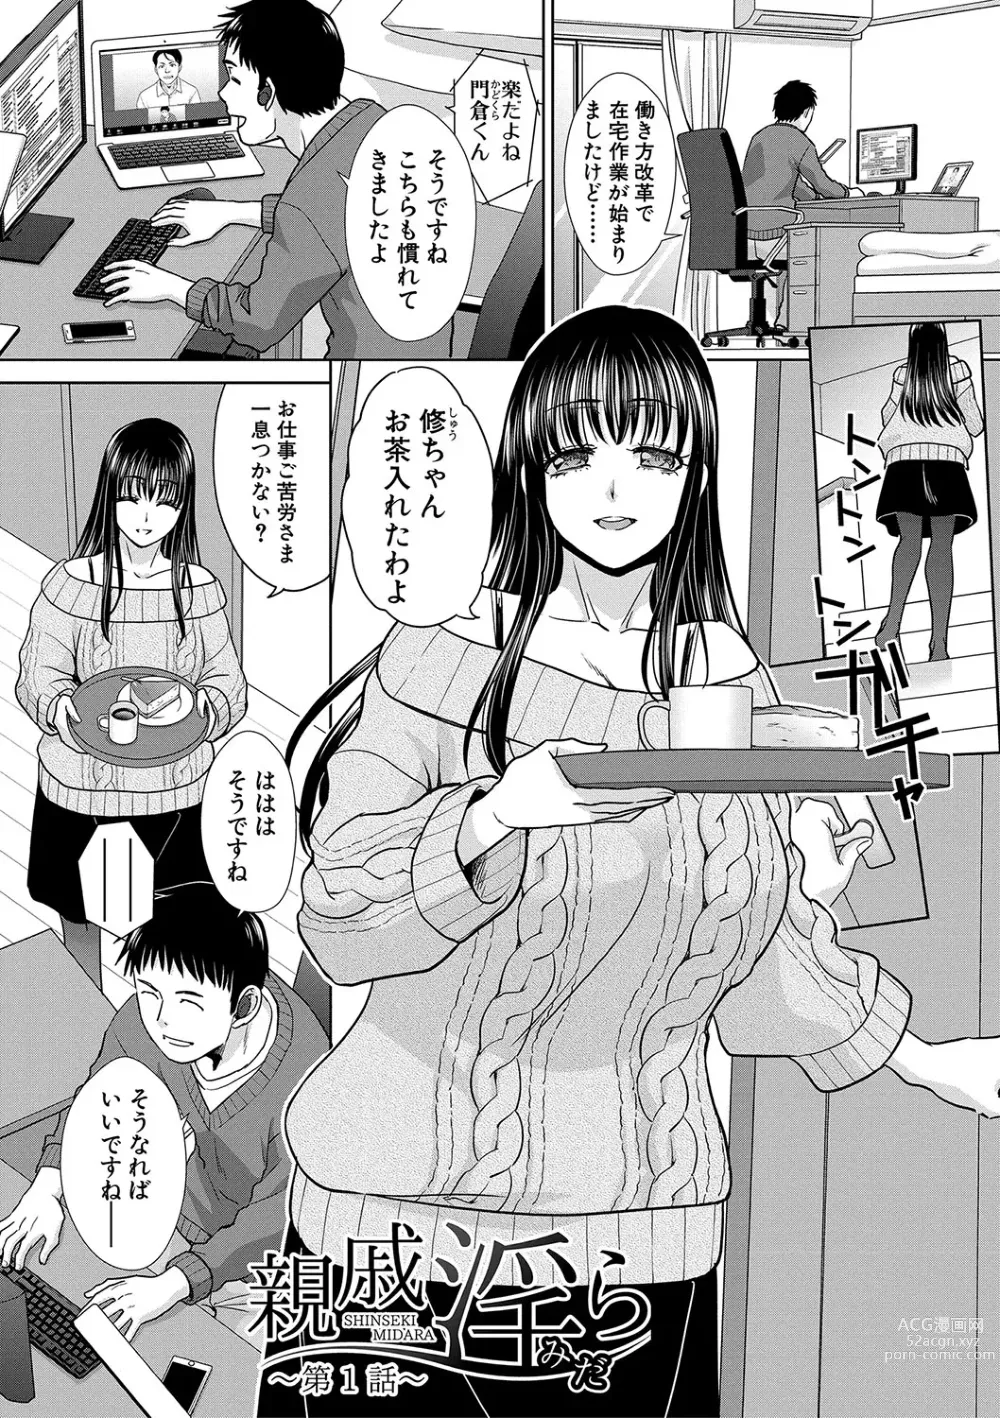 Page 4 of manga Shinseki Midara My Home Harem